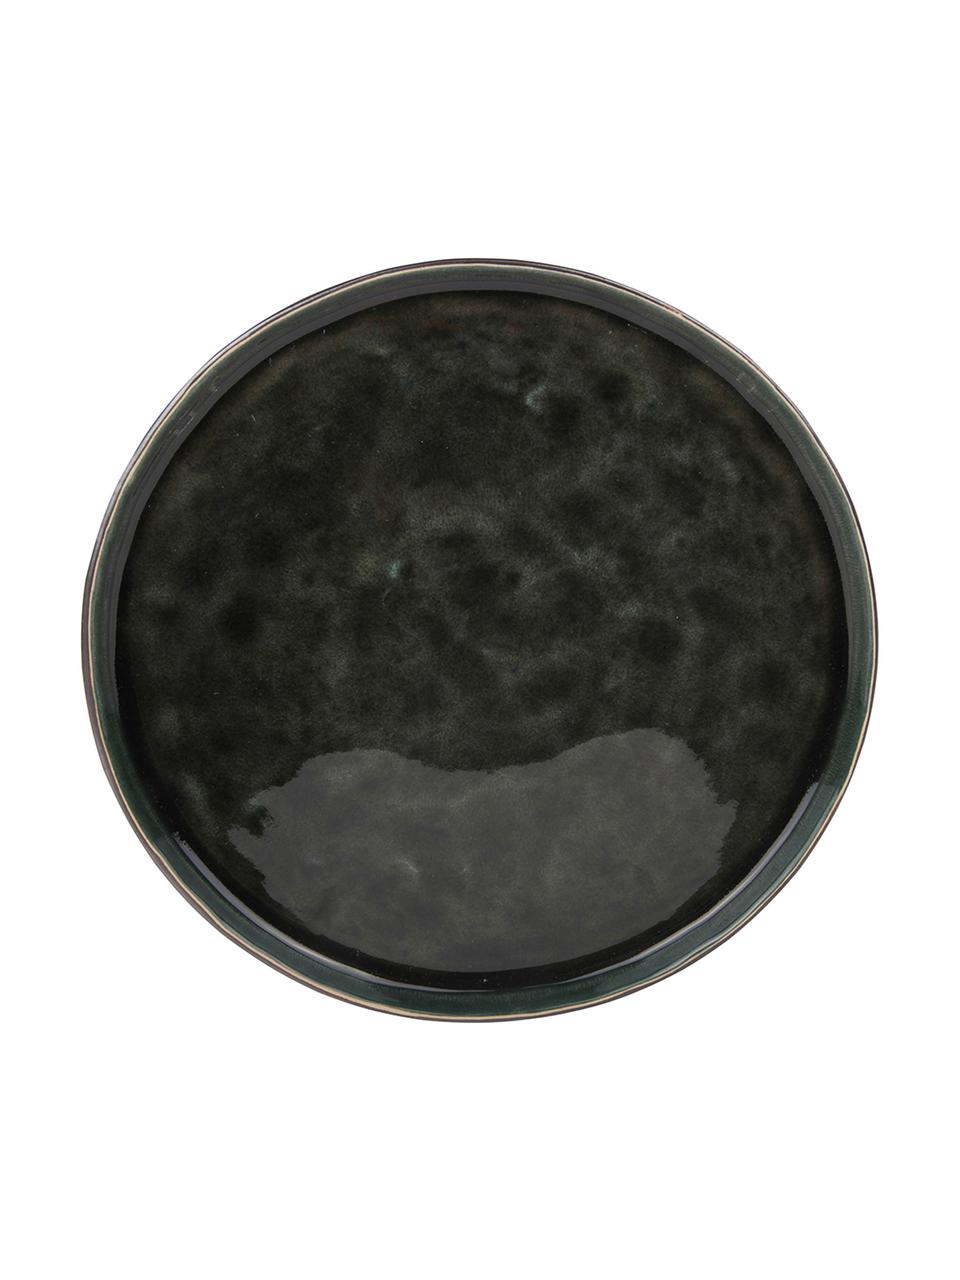 Platos postre Lagune, 6 uds., Cerámica, Gris topo, marrón negro, Ø 22 cm